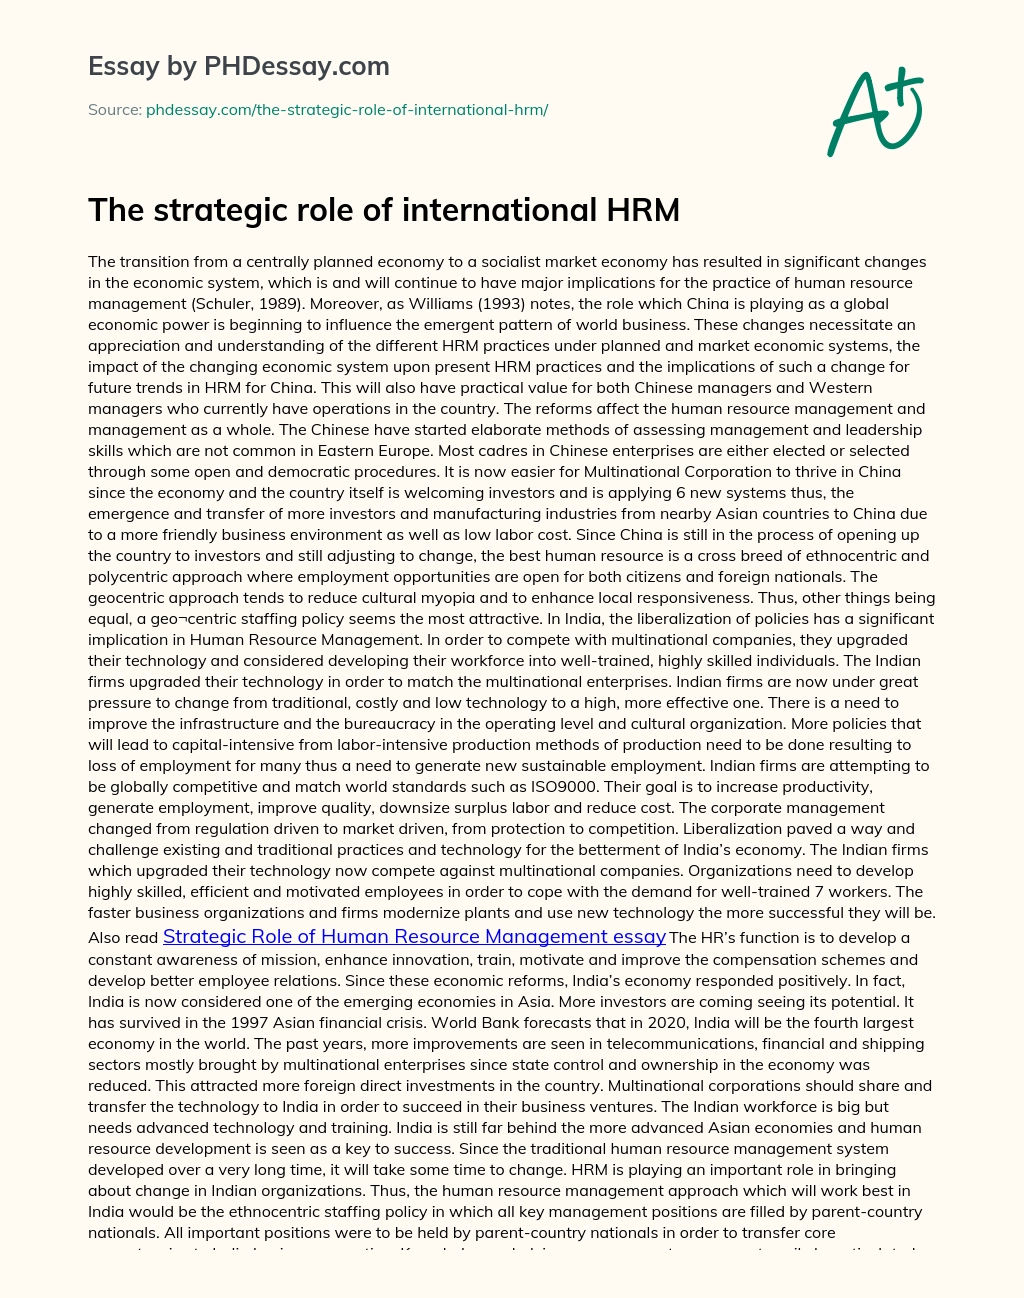 The strategic role of international HRM essay